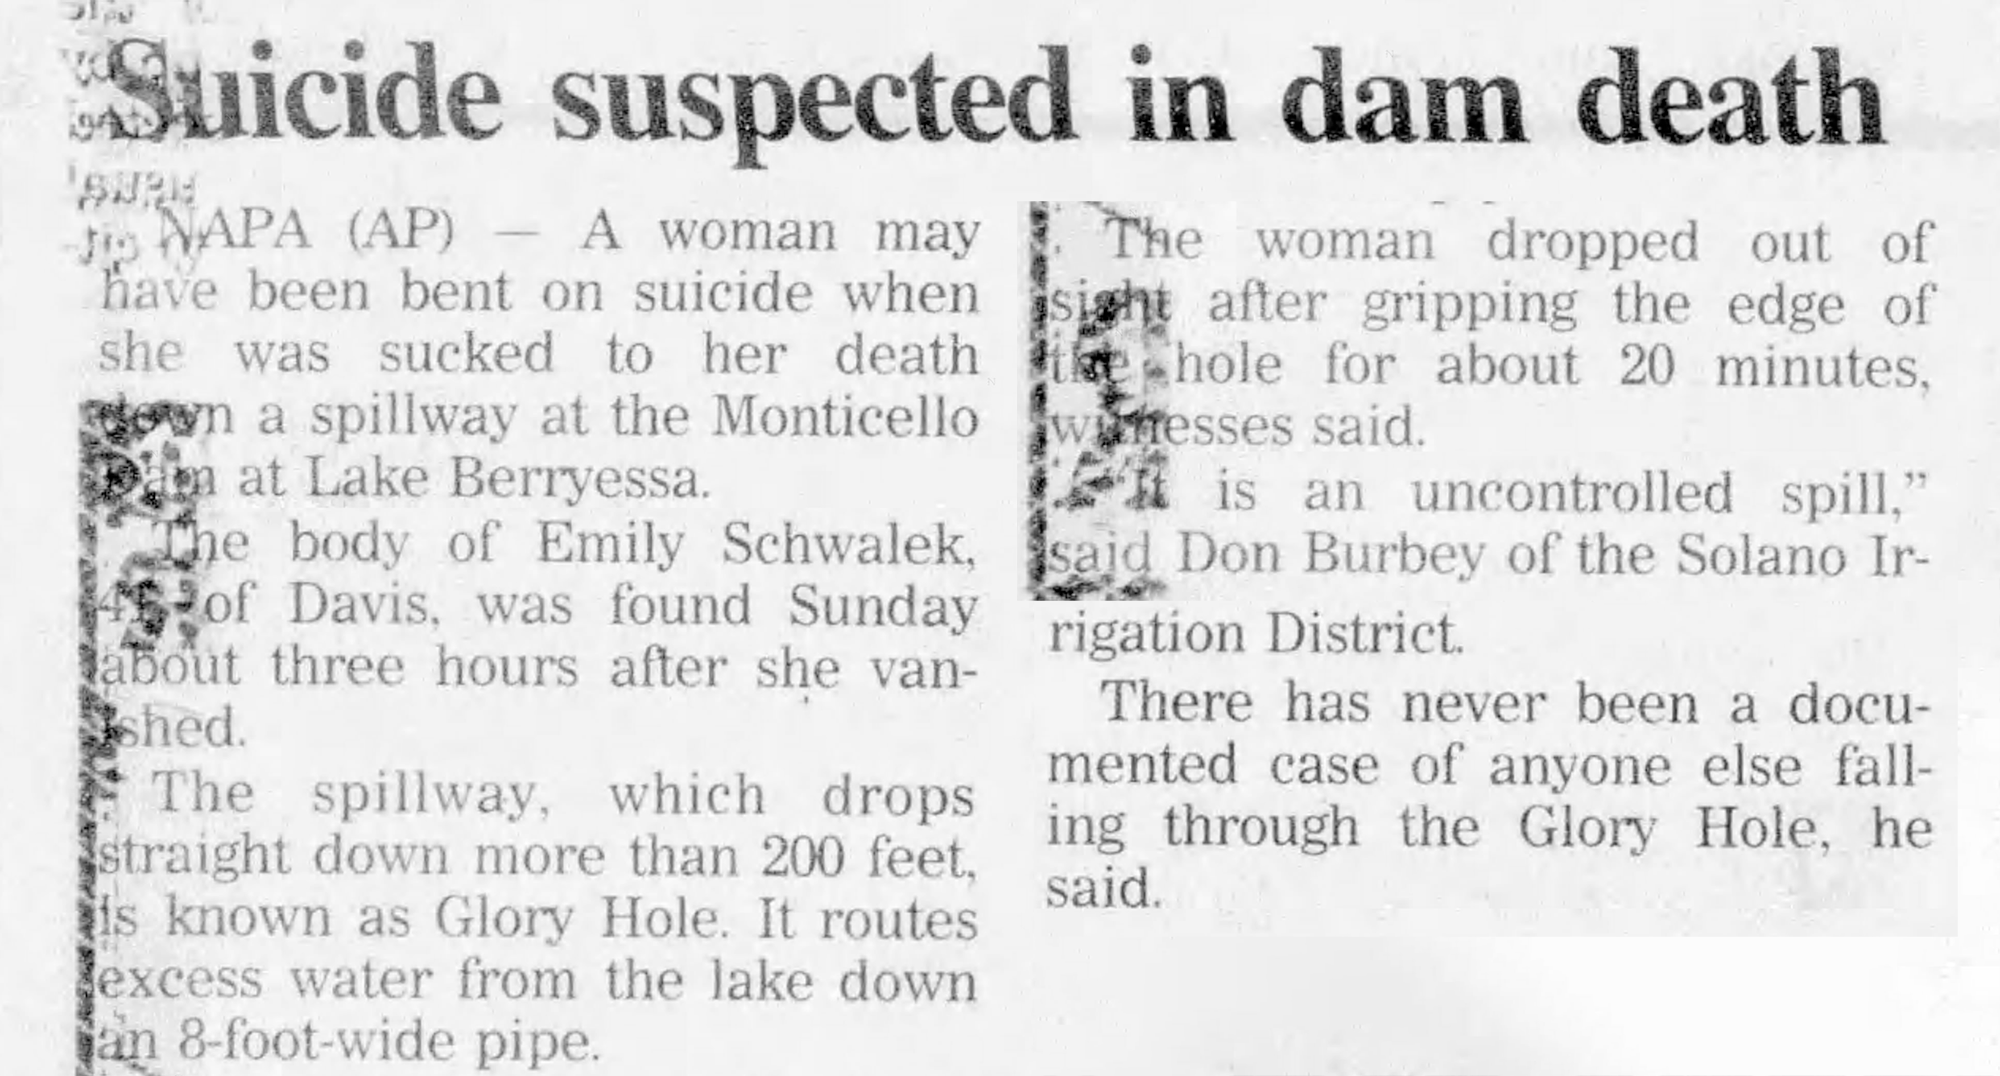 Suicide suspected in dam death